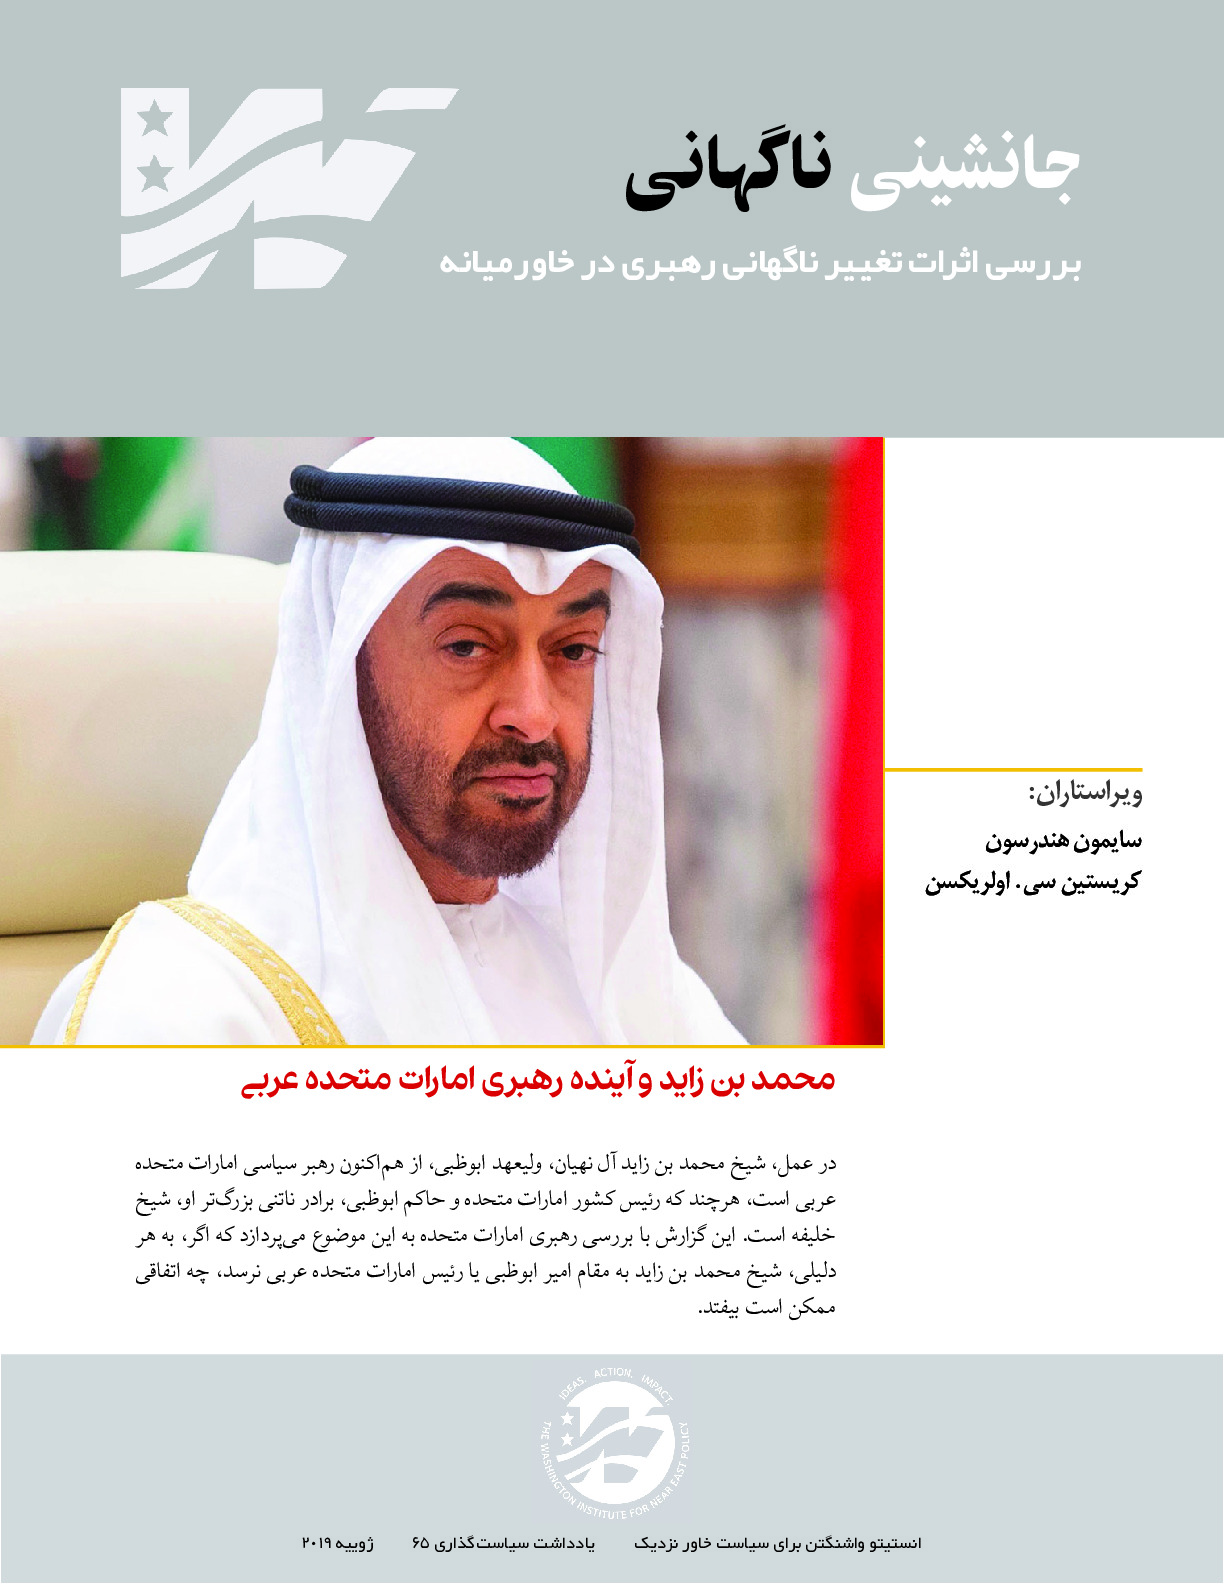 MbZ and Future Leadership UAE - Persian edition.pdf